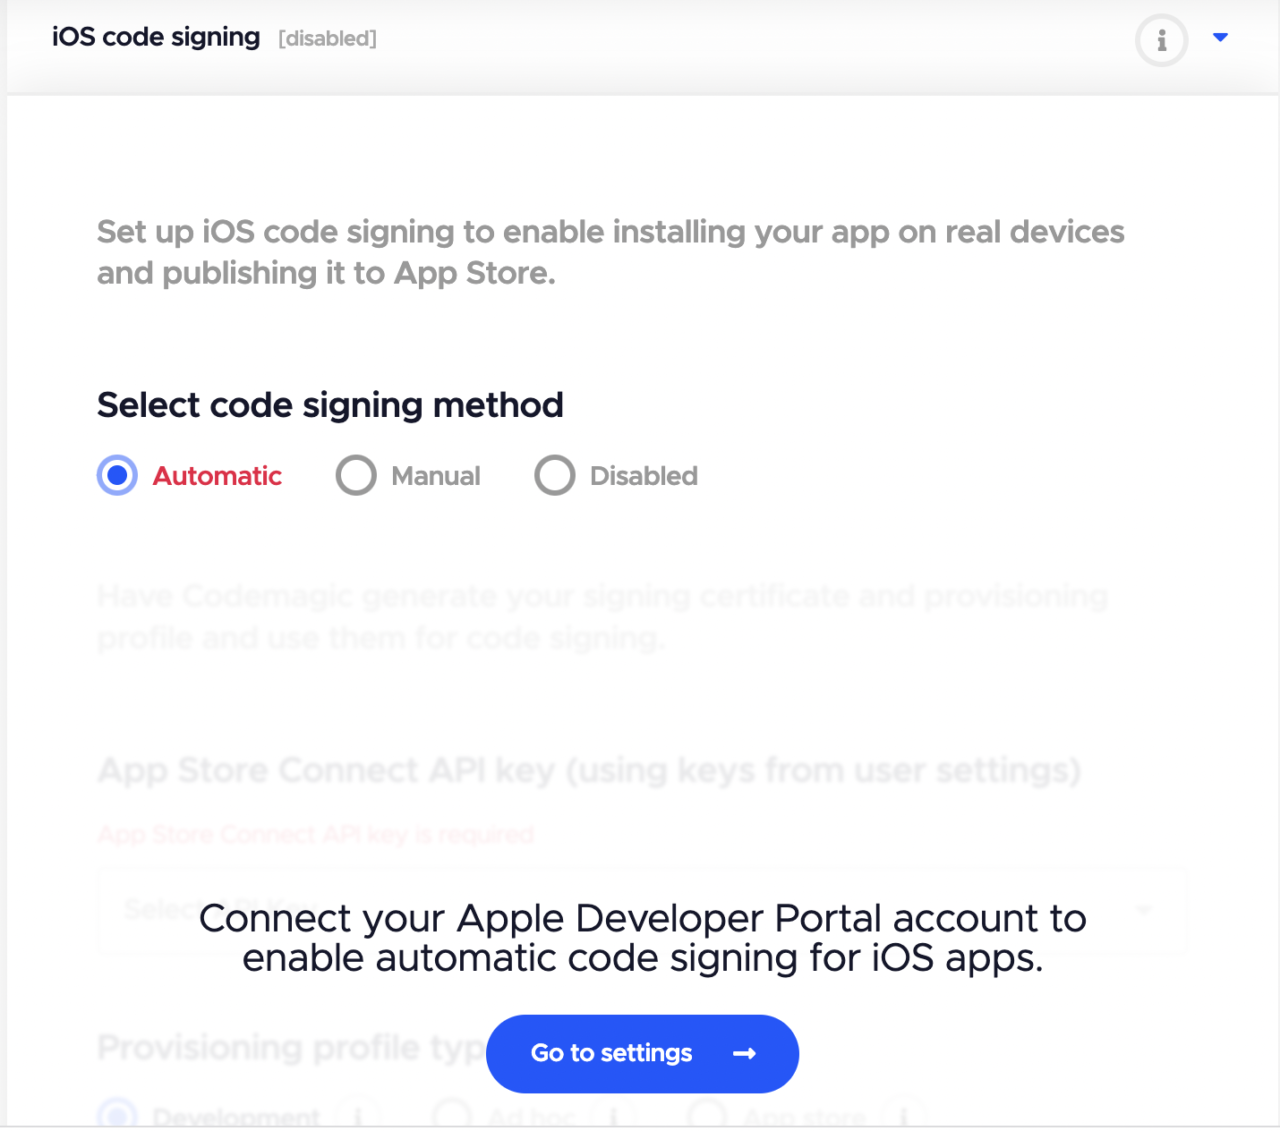 iOS code signing